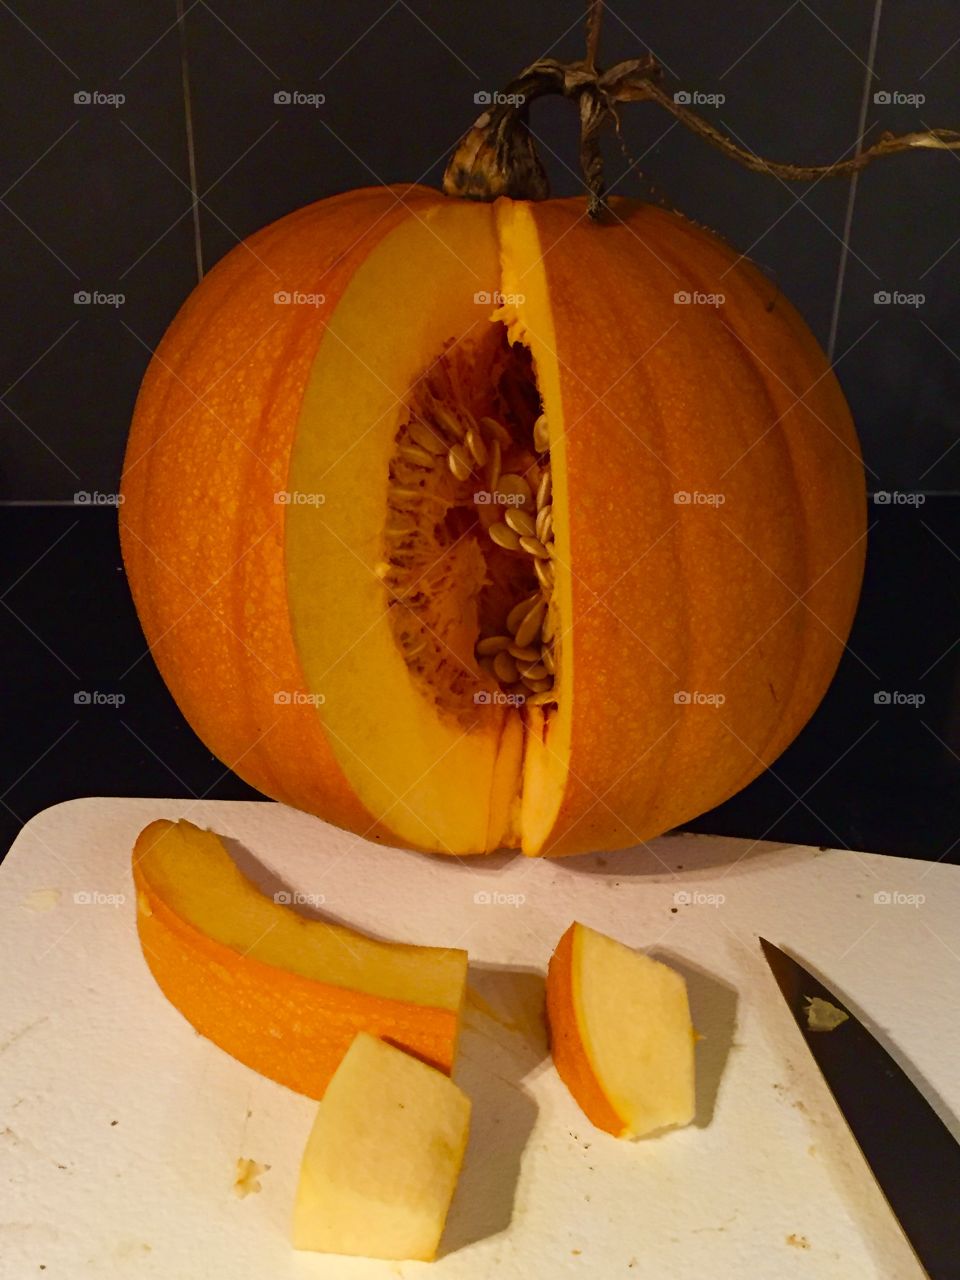 Cutting a pumpkin